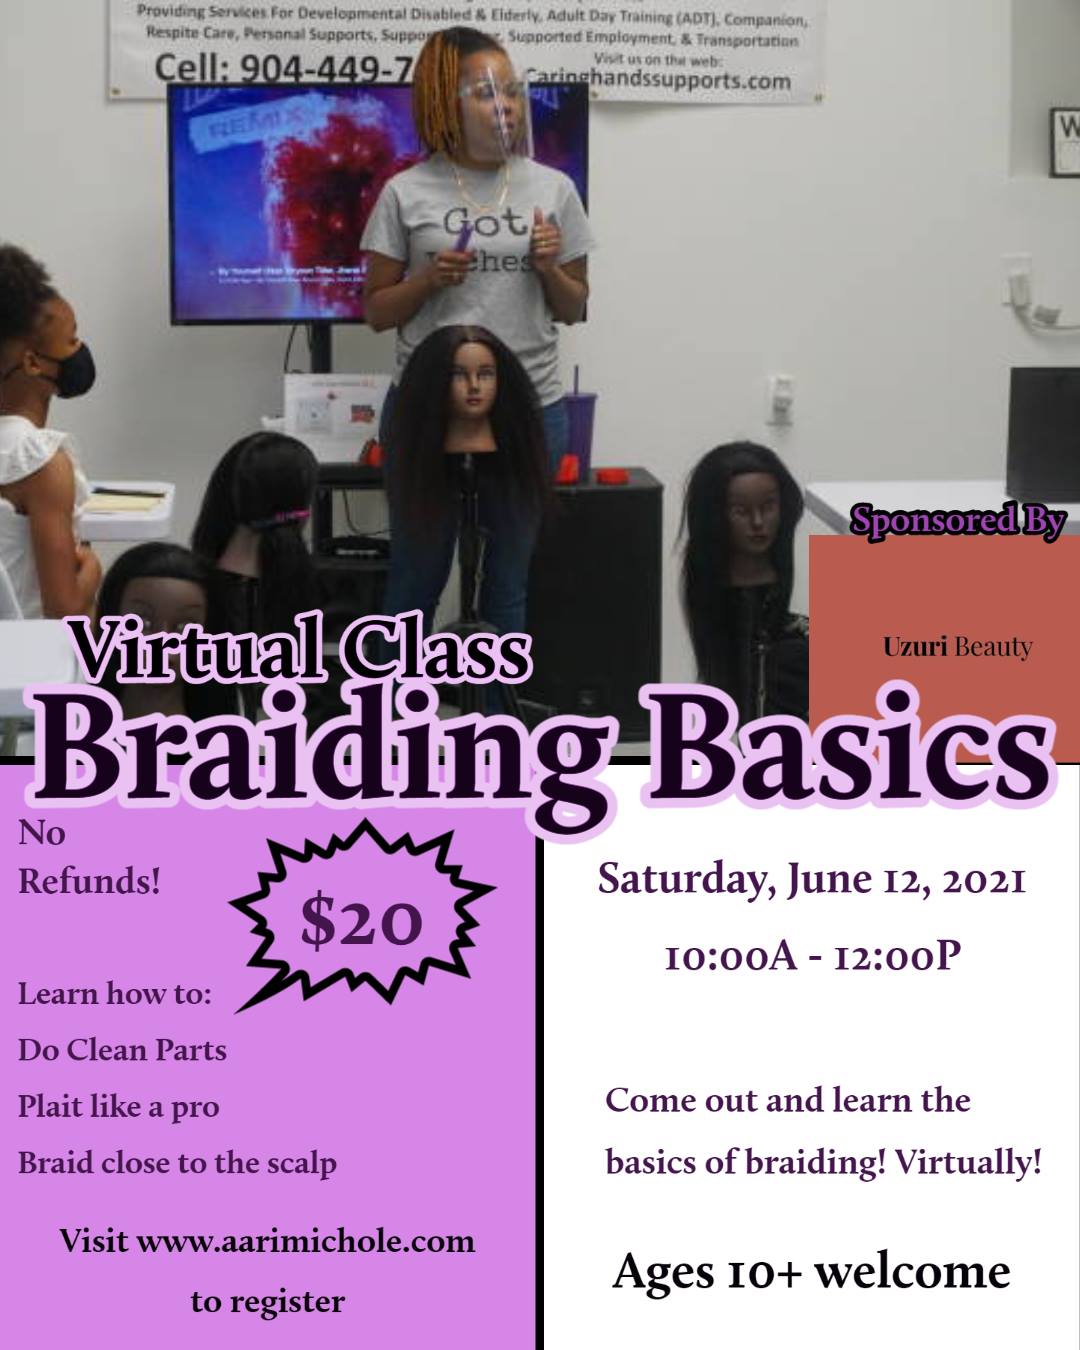 Michole Styles Braiding Basics Course